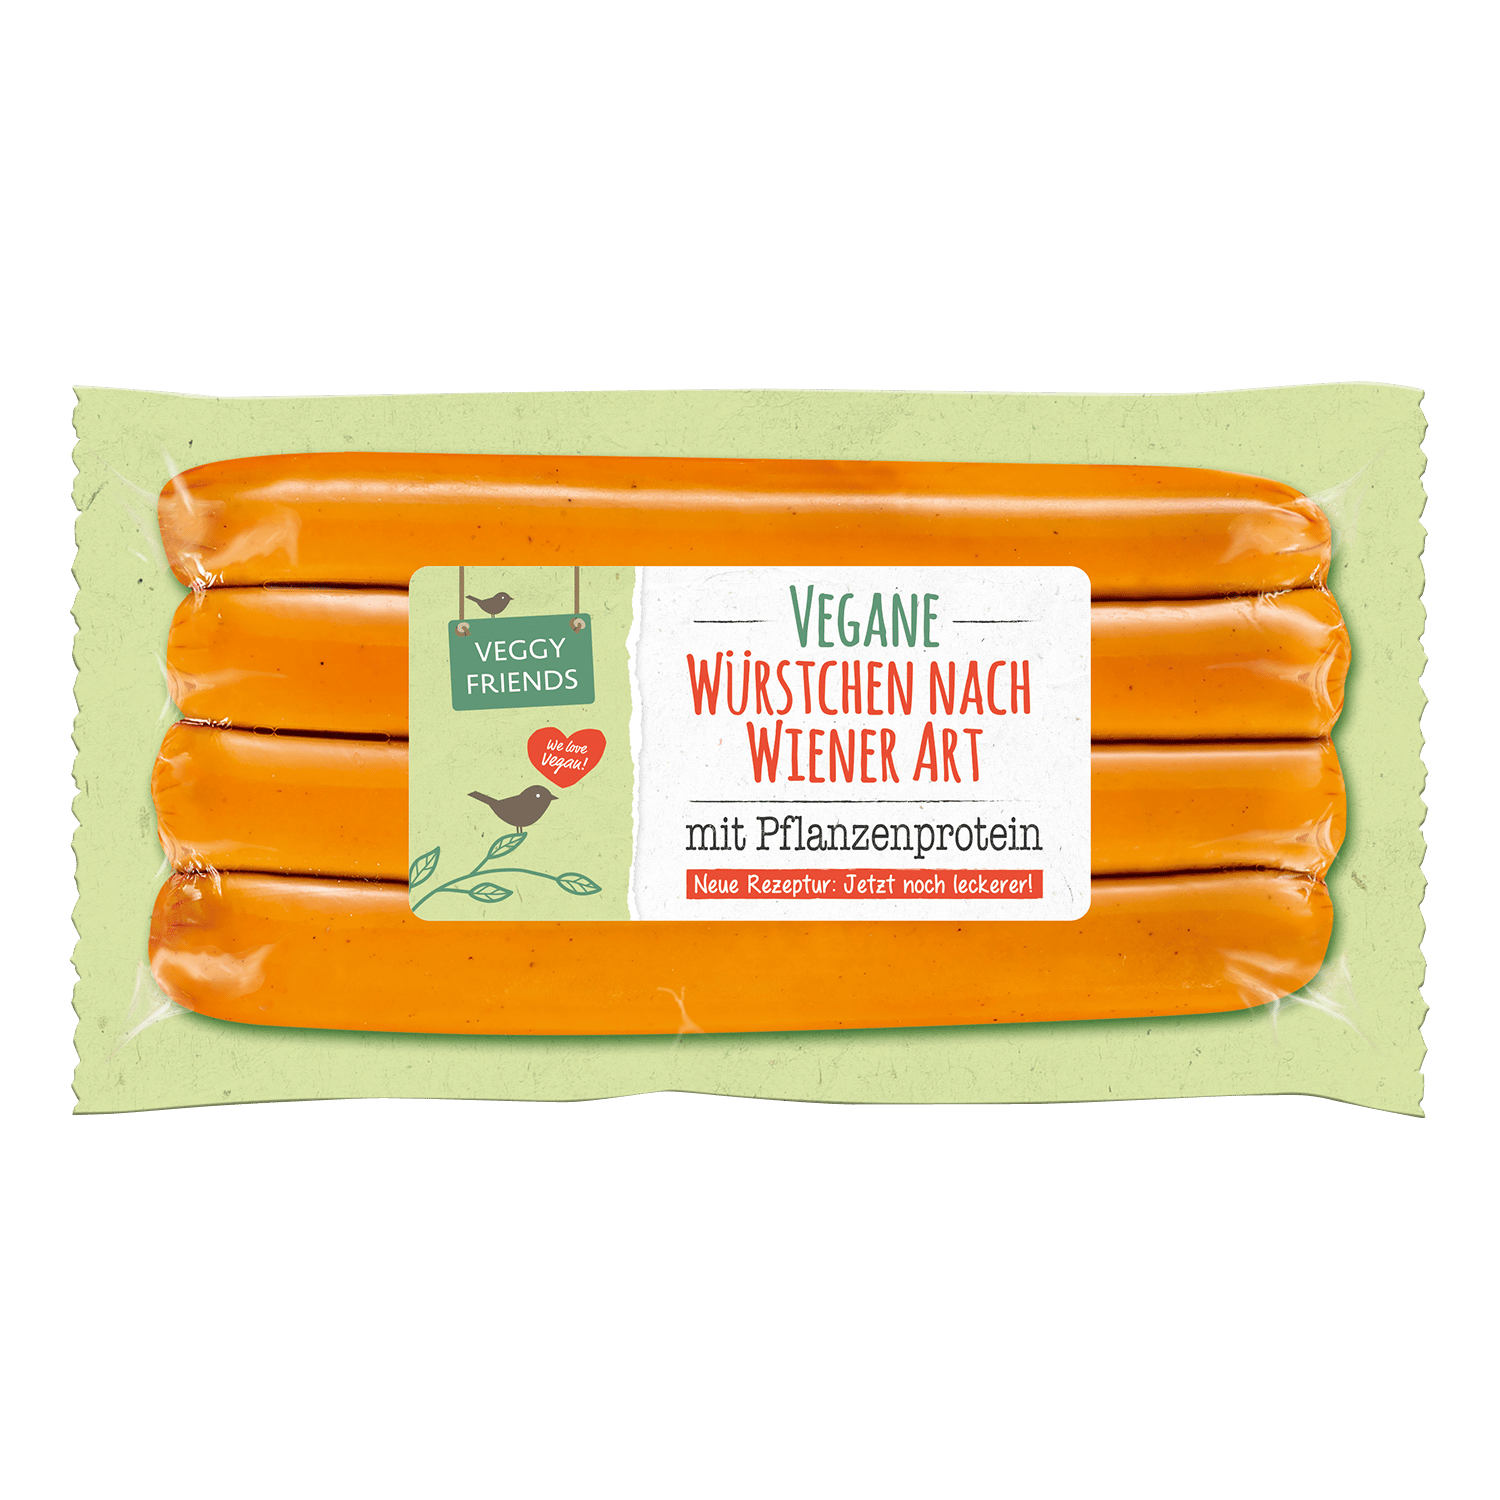 Vegan Sausage "Wiener Art", 200g